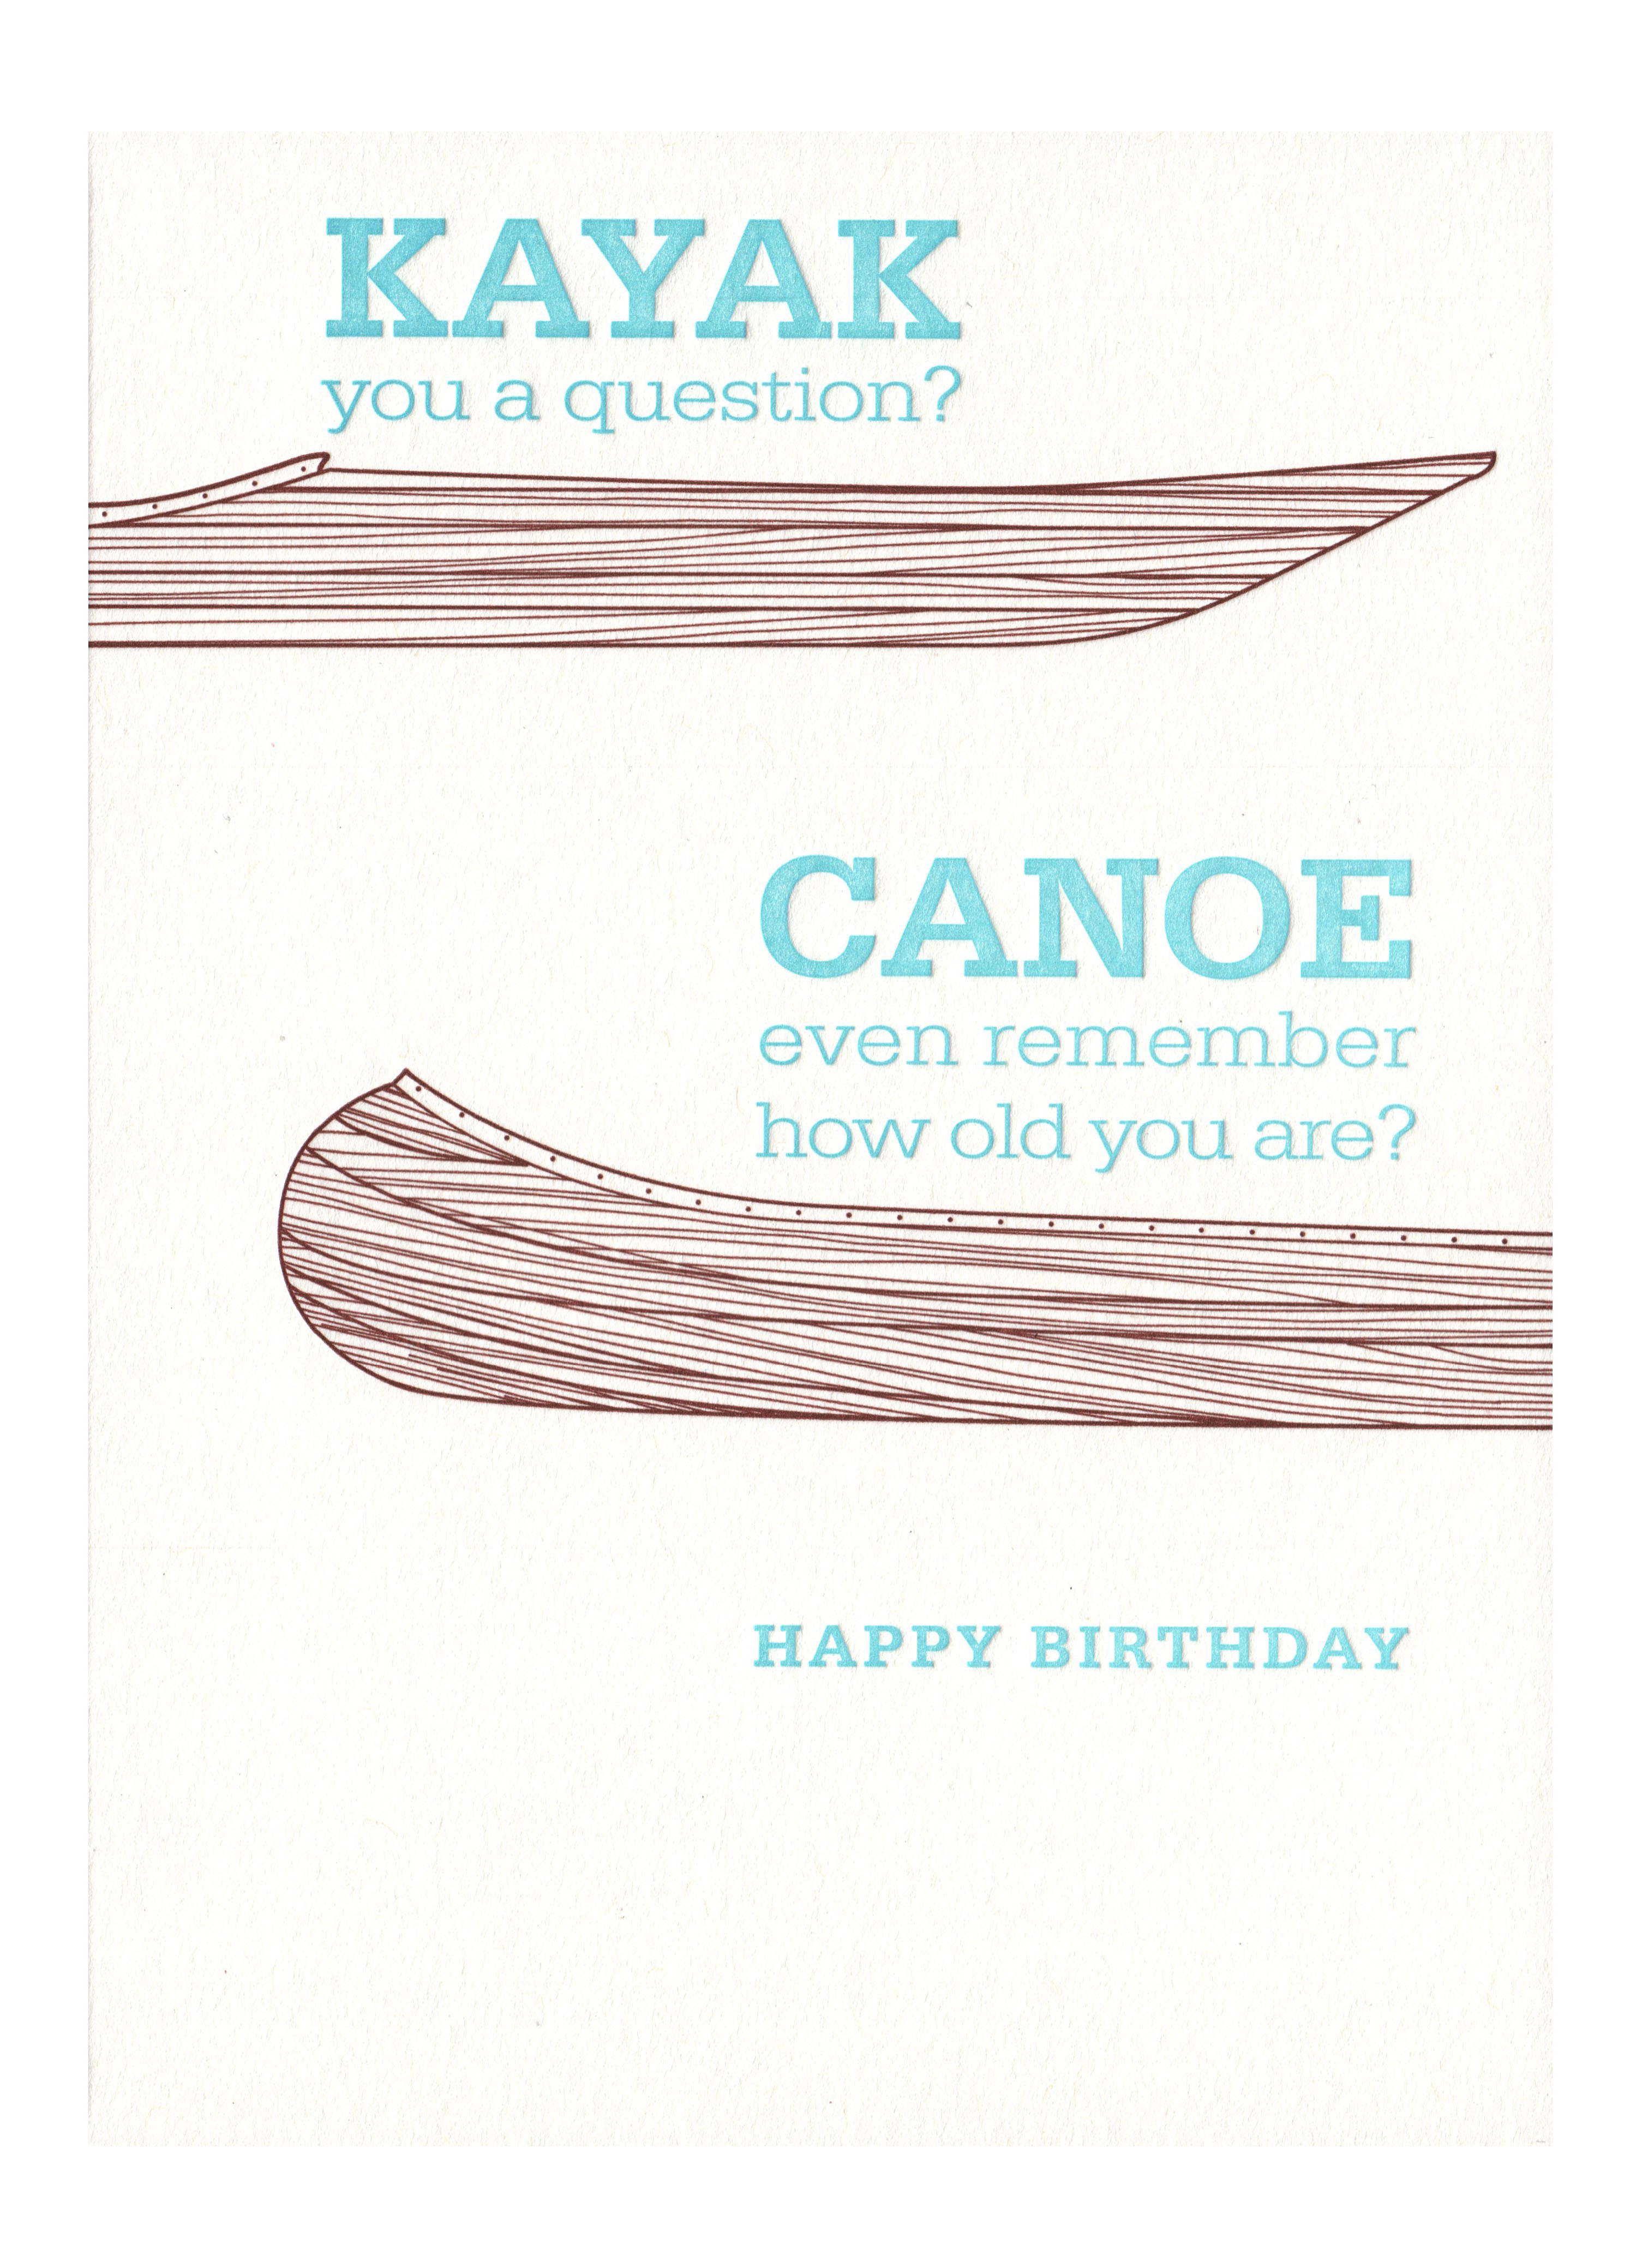 Letterpressed Kayak Canoe Birthday Card